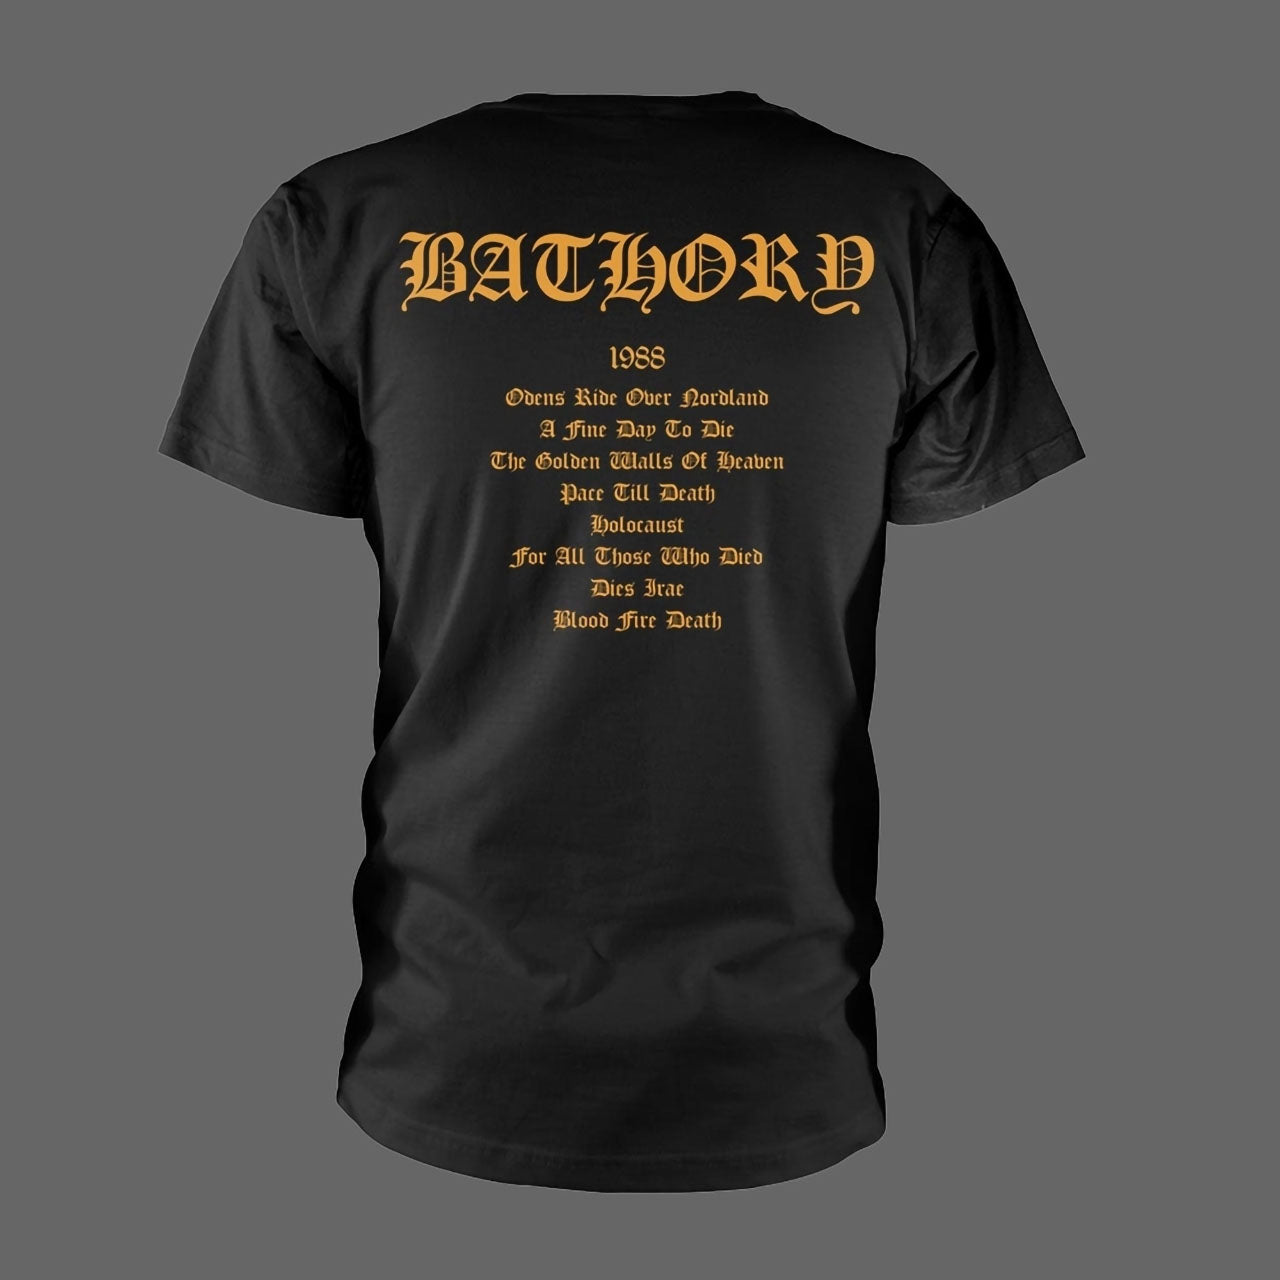 Bathory - Blood Fire Death (T-Shirt)